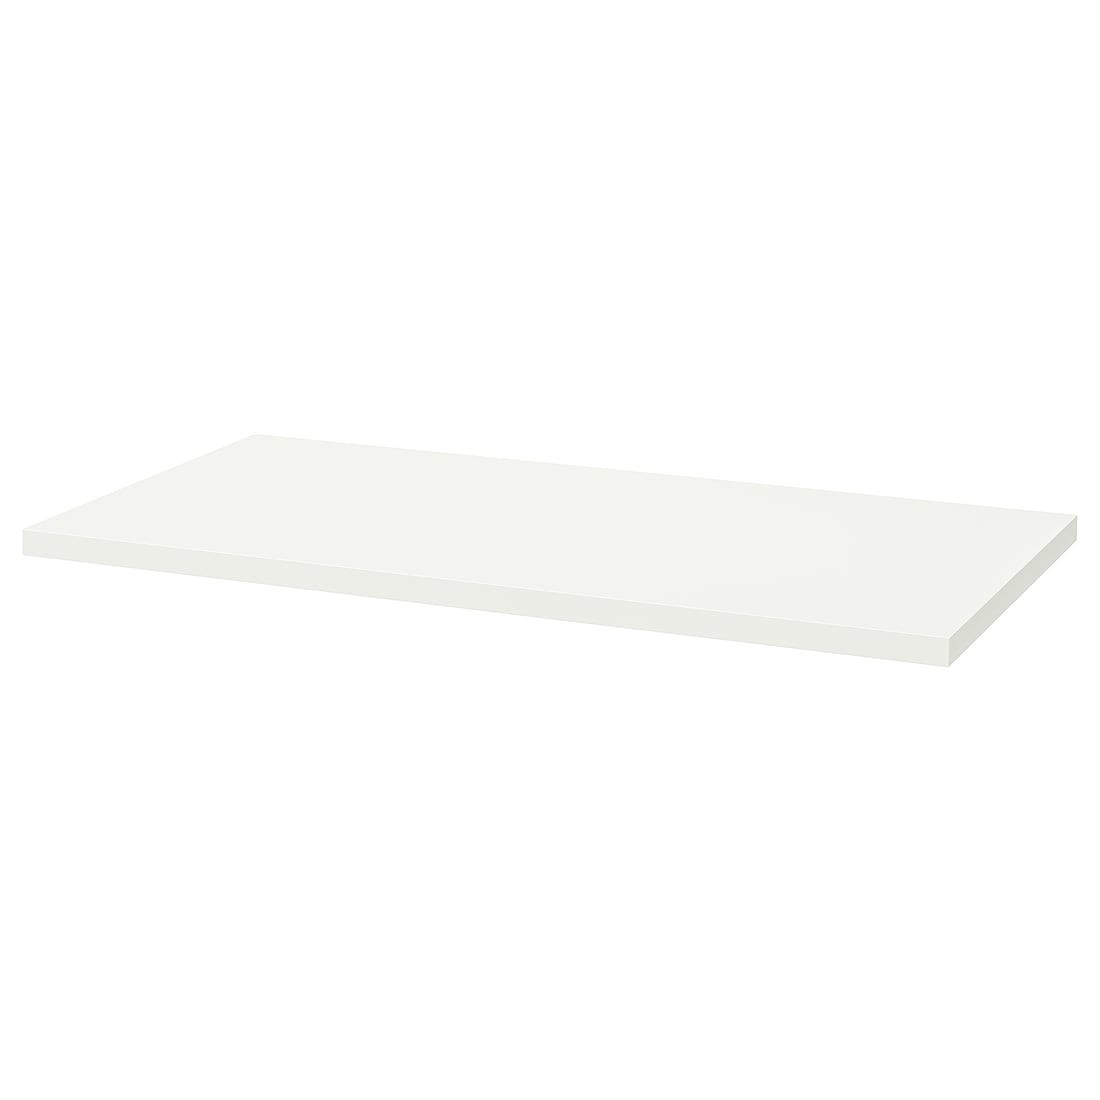 IKEA LAGKAPTEN ЛАГКАПТЕН Столешница, белый, 120x60 см 10460666 104.606.66